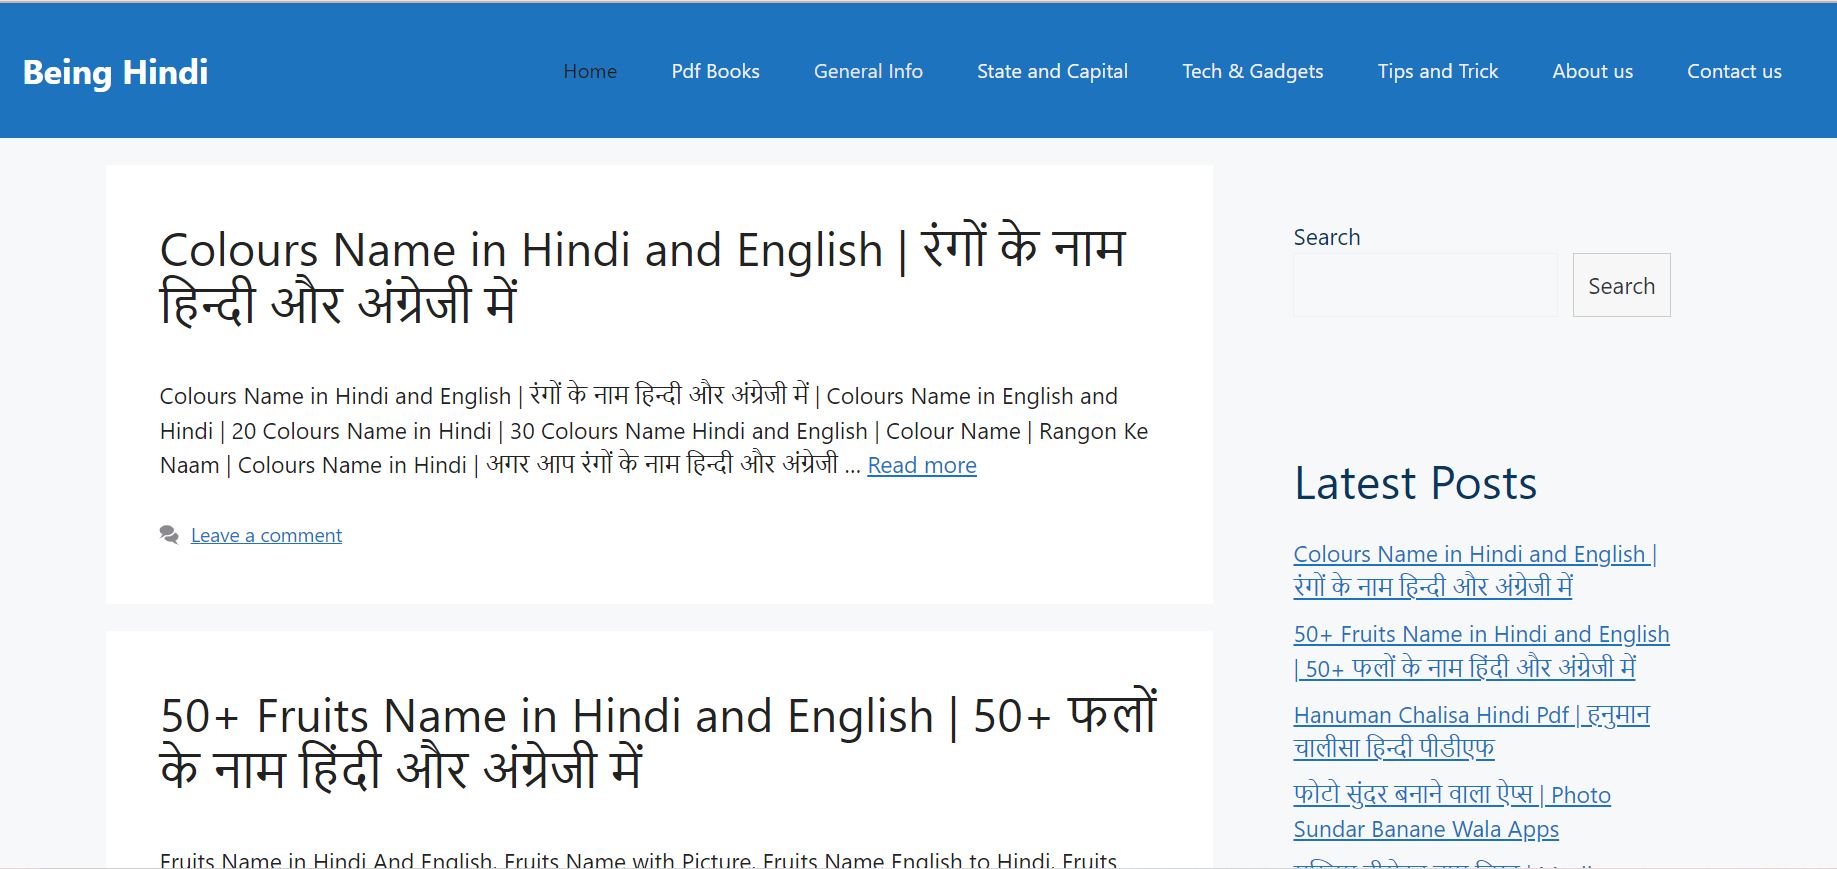 Being Hindi